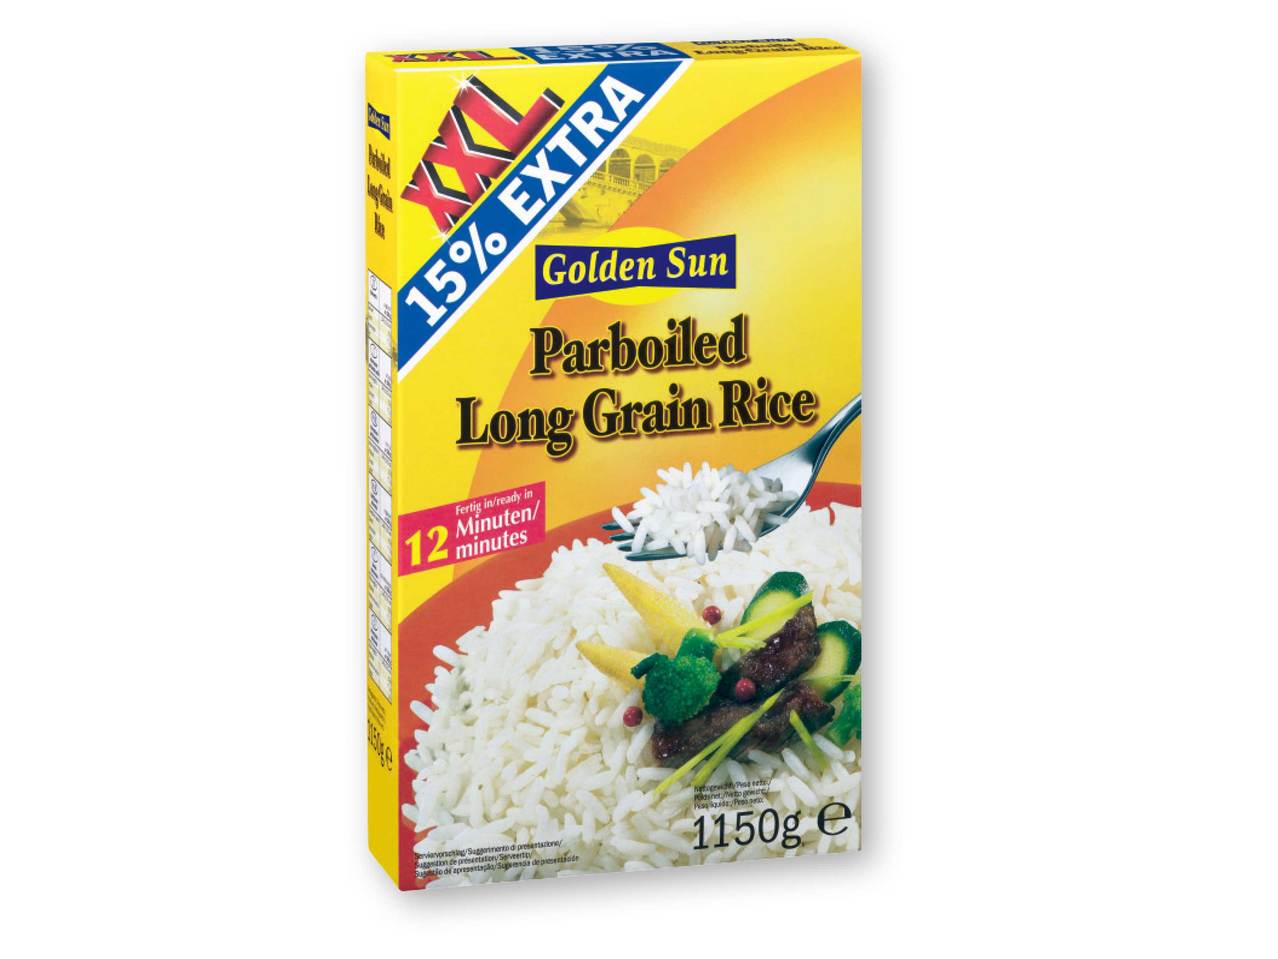 GOLDEN SUN(R) Parboiled Long Grain Rice